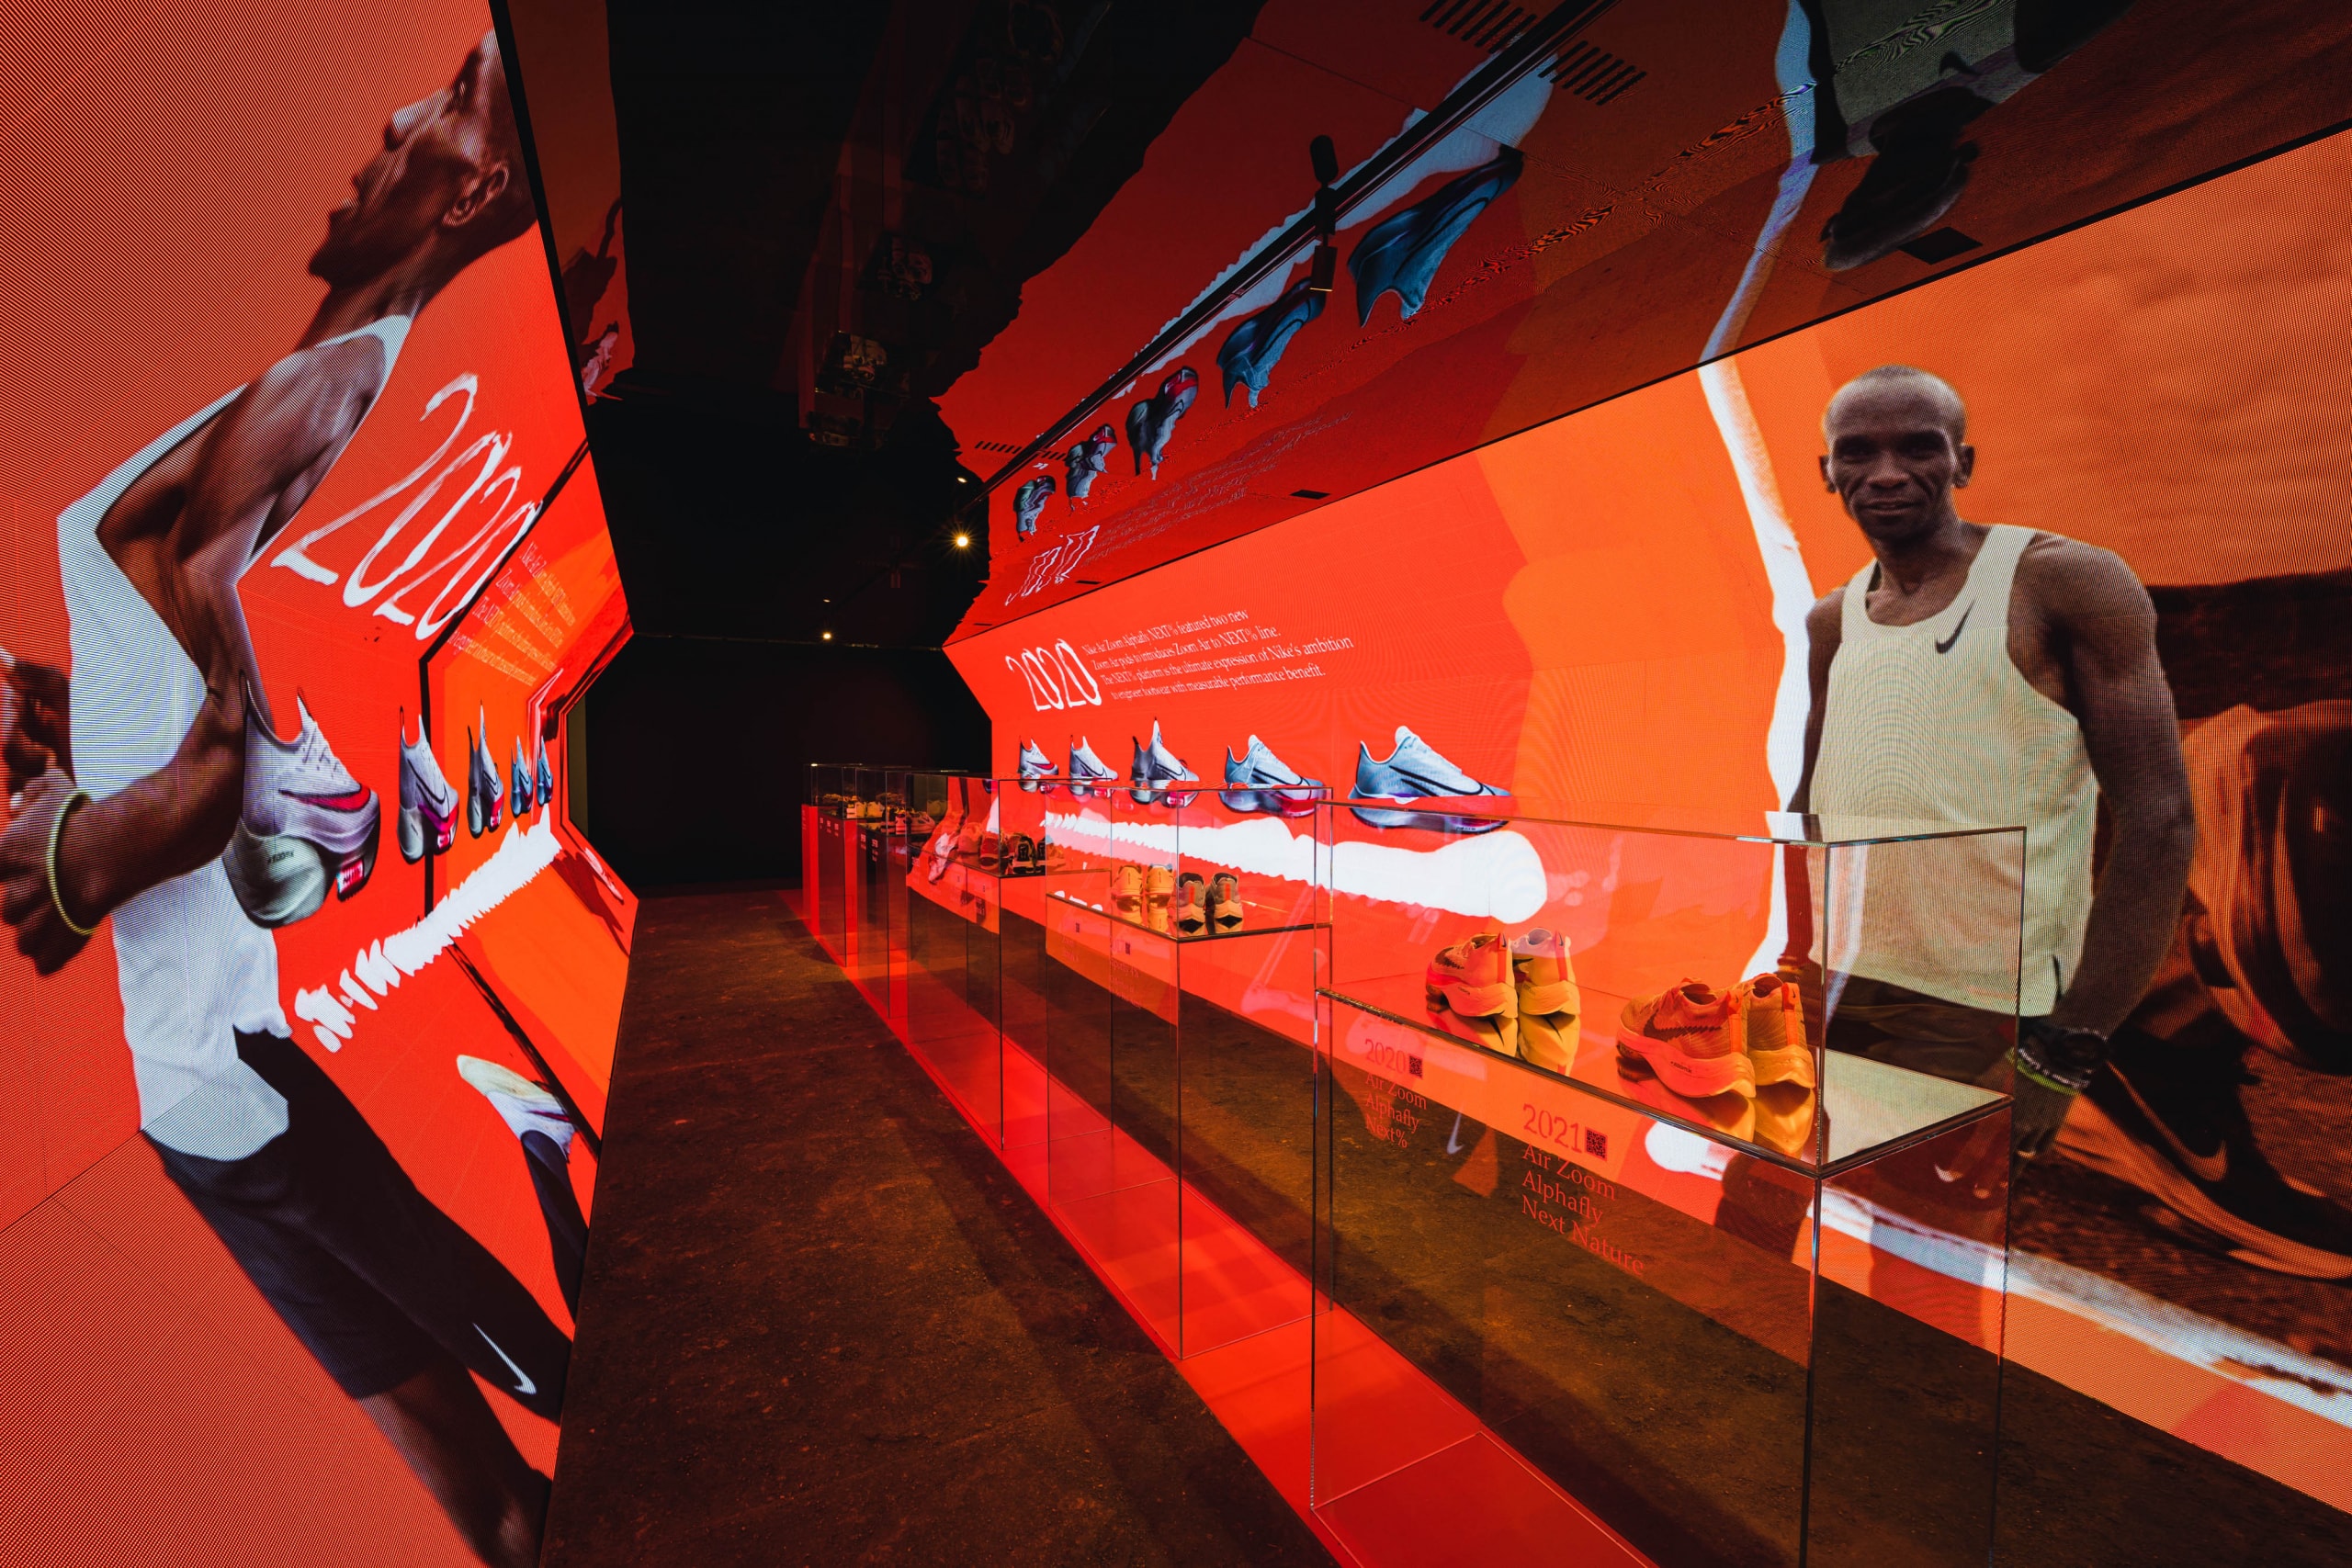 Nike 全新香港展覽《Nike at 50: A Genealogy of Progress》正式開催